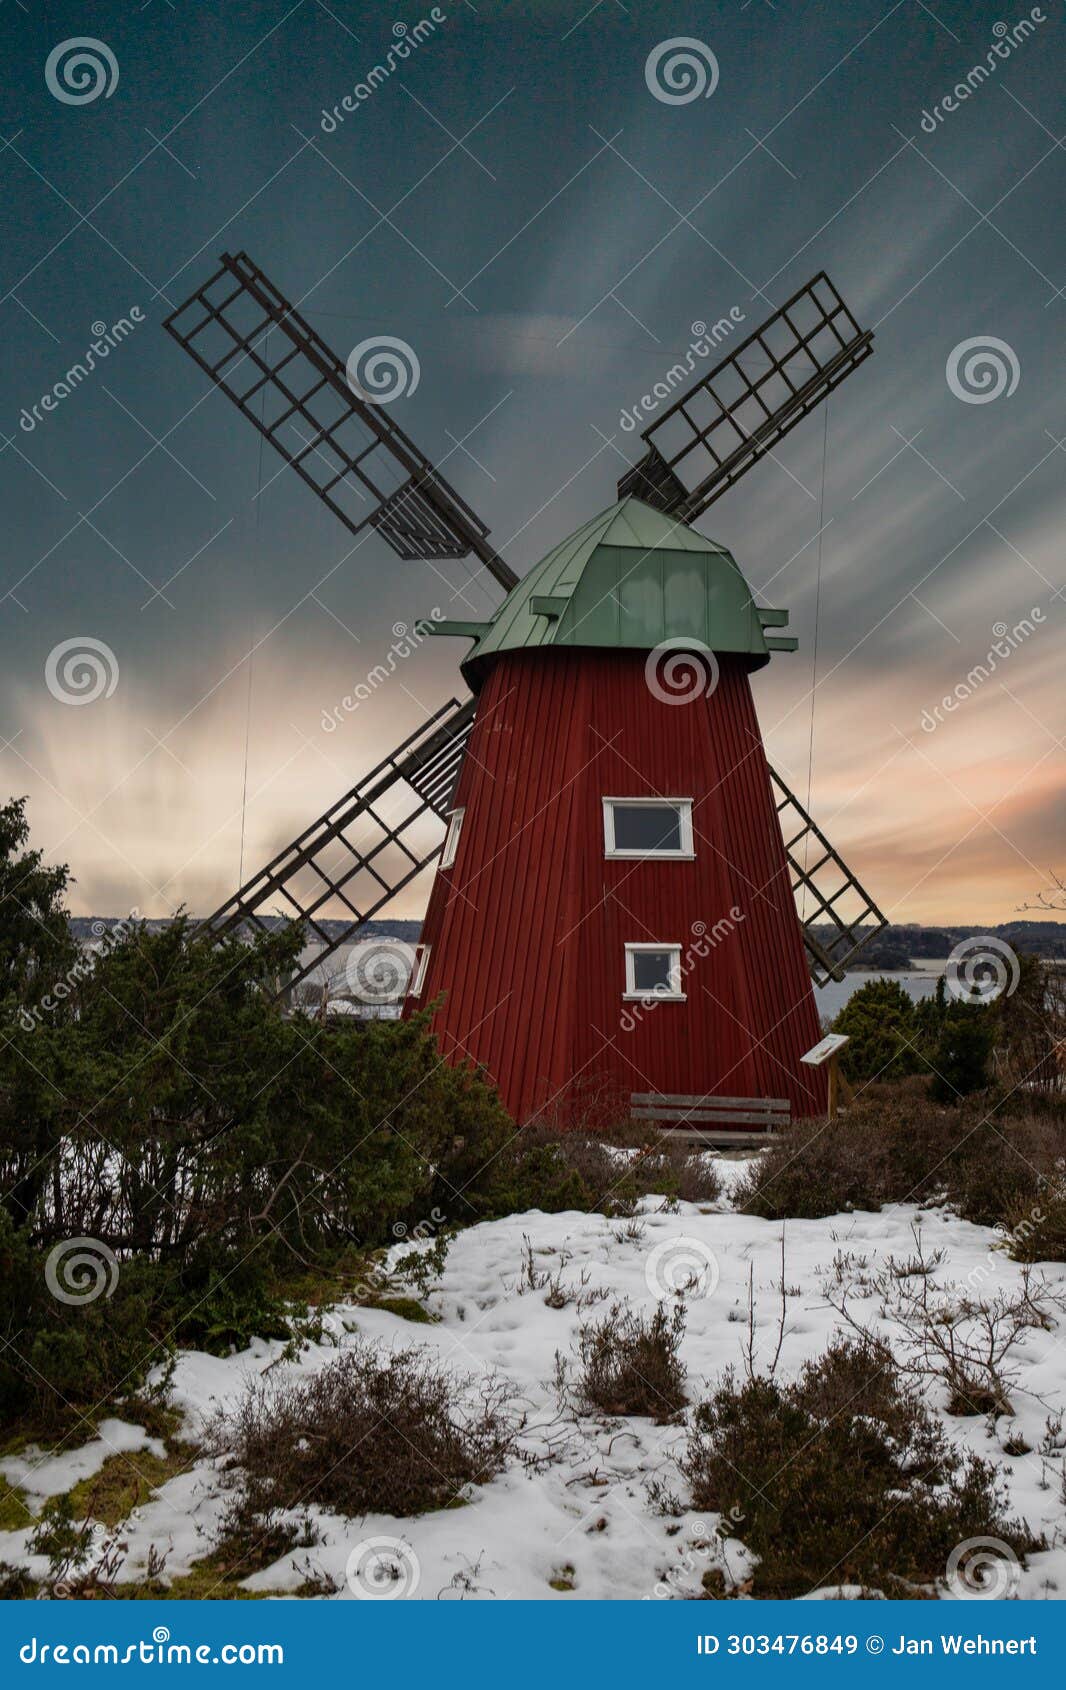 historical windmill made of red wood in a winter landscape.stenungsund in sweden